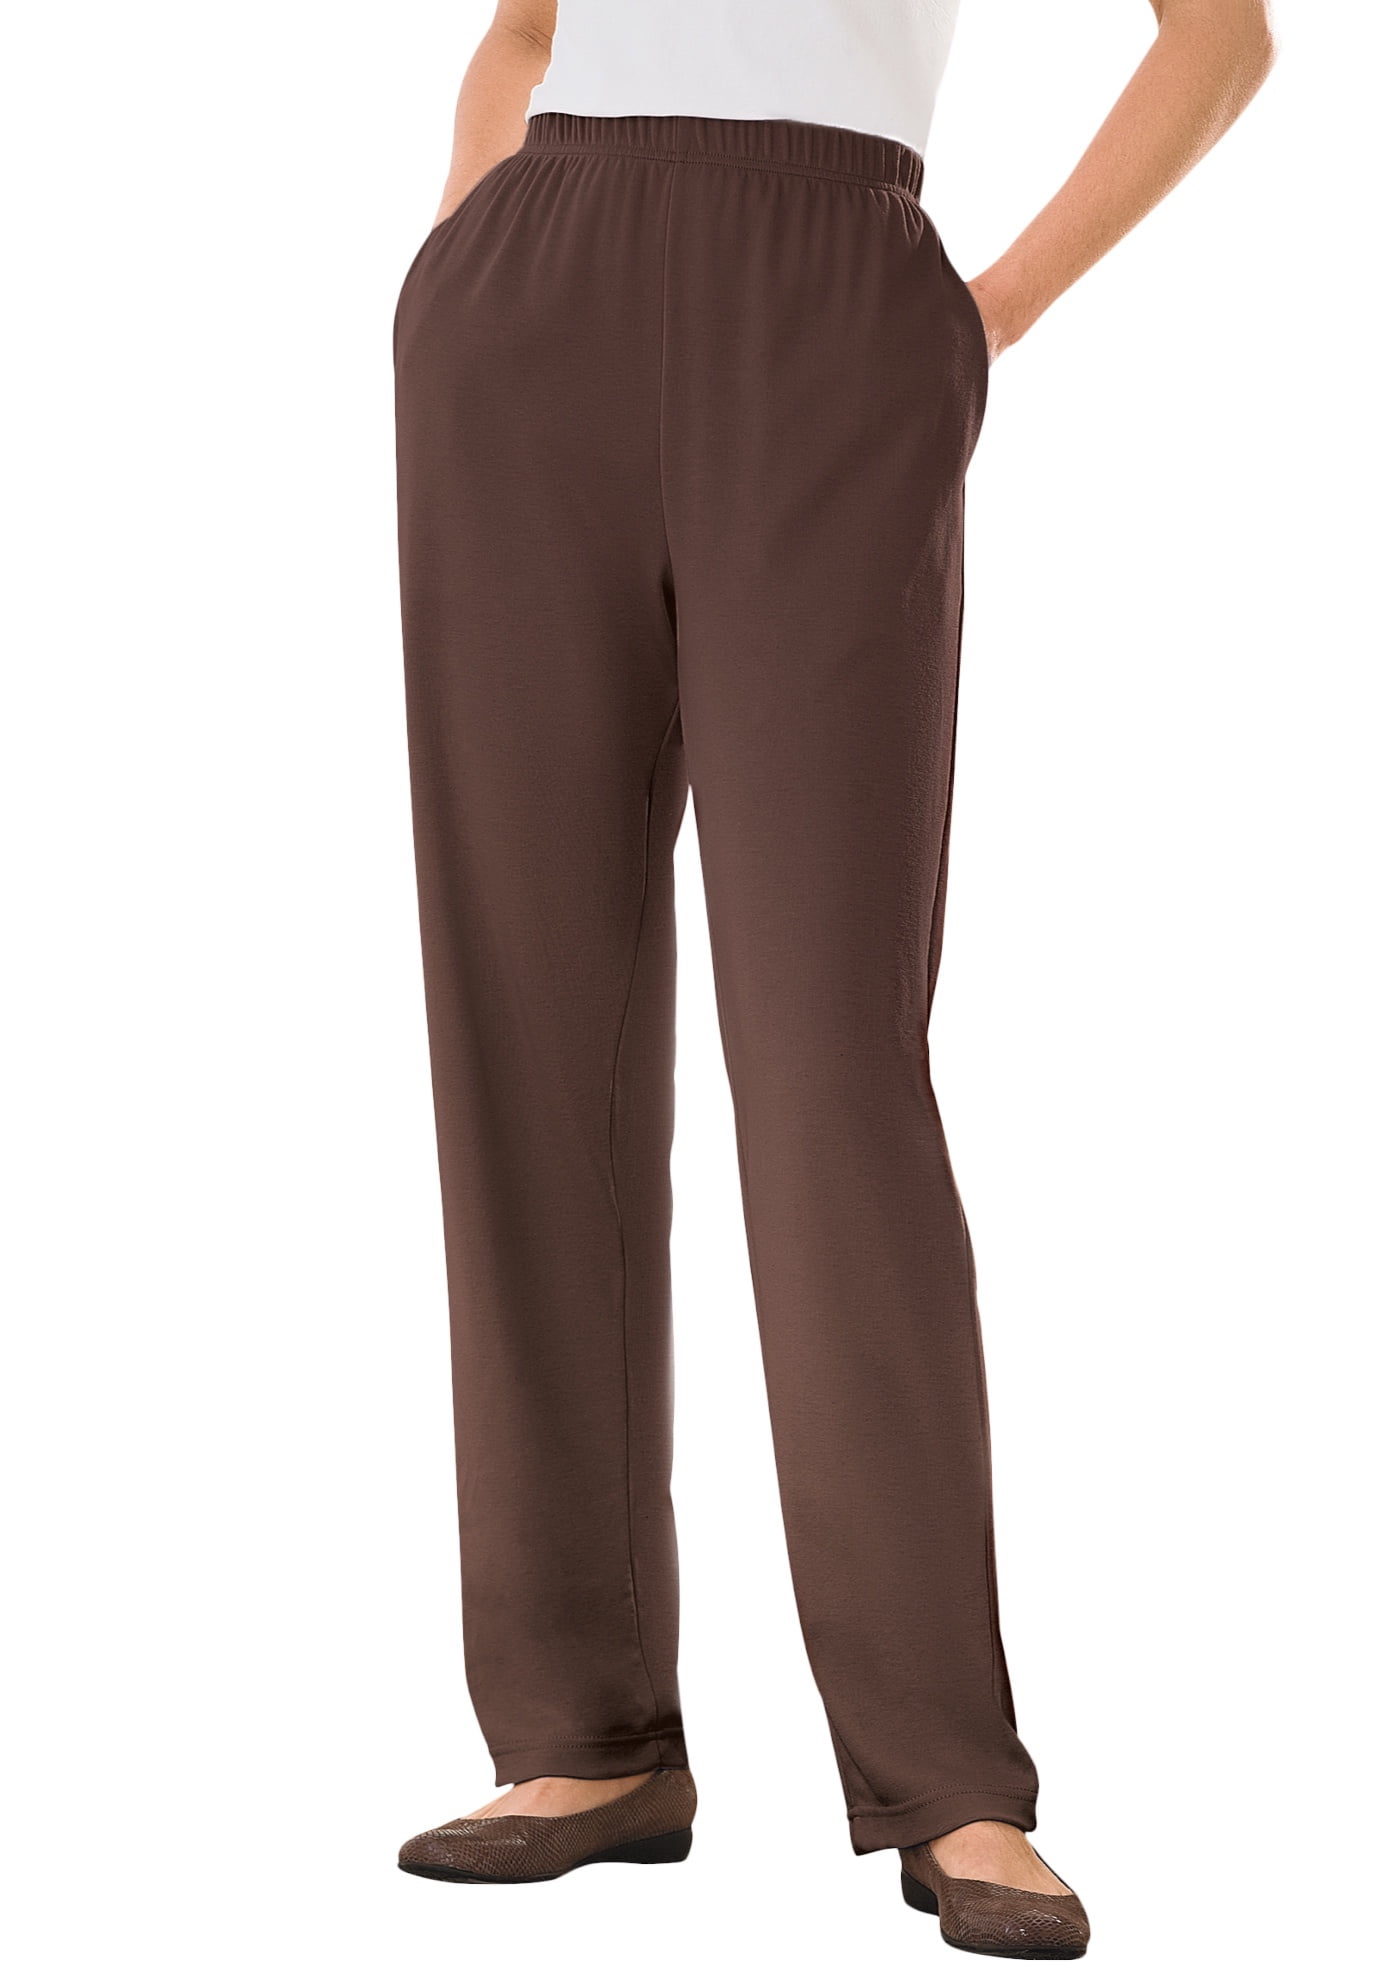 1) Kmart Basic Editions 2X Women's 100% Cotton EGP Knit Pants Elastic Waist  New on eBid United States